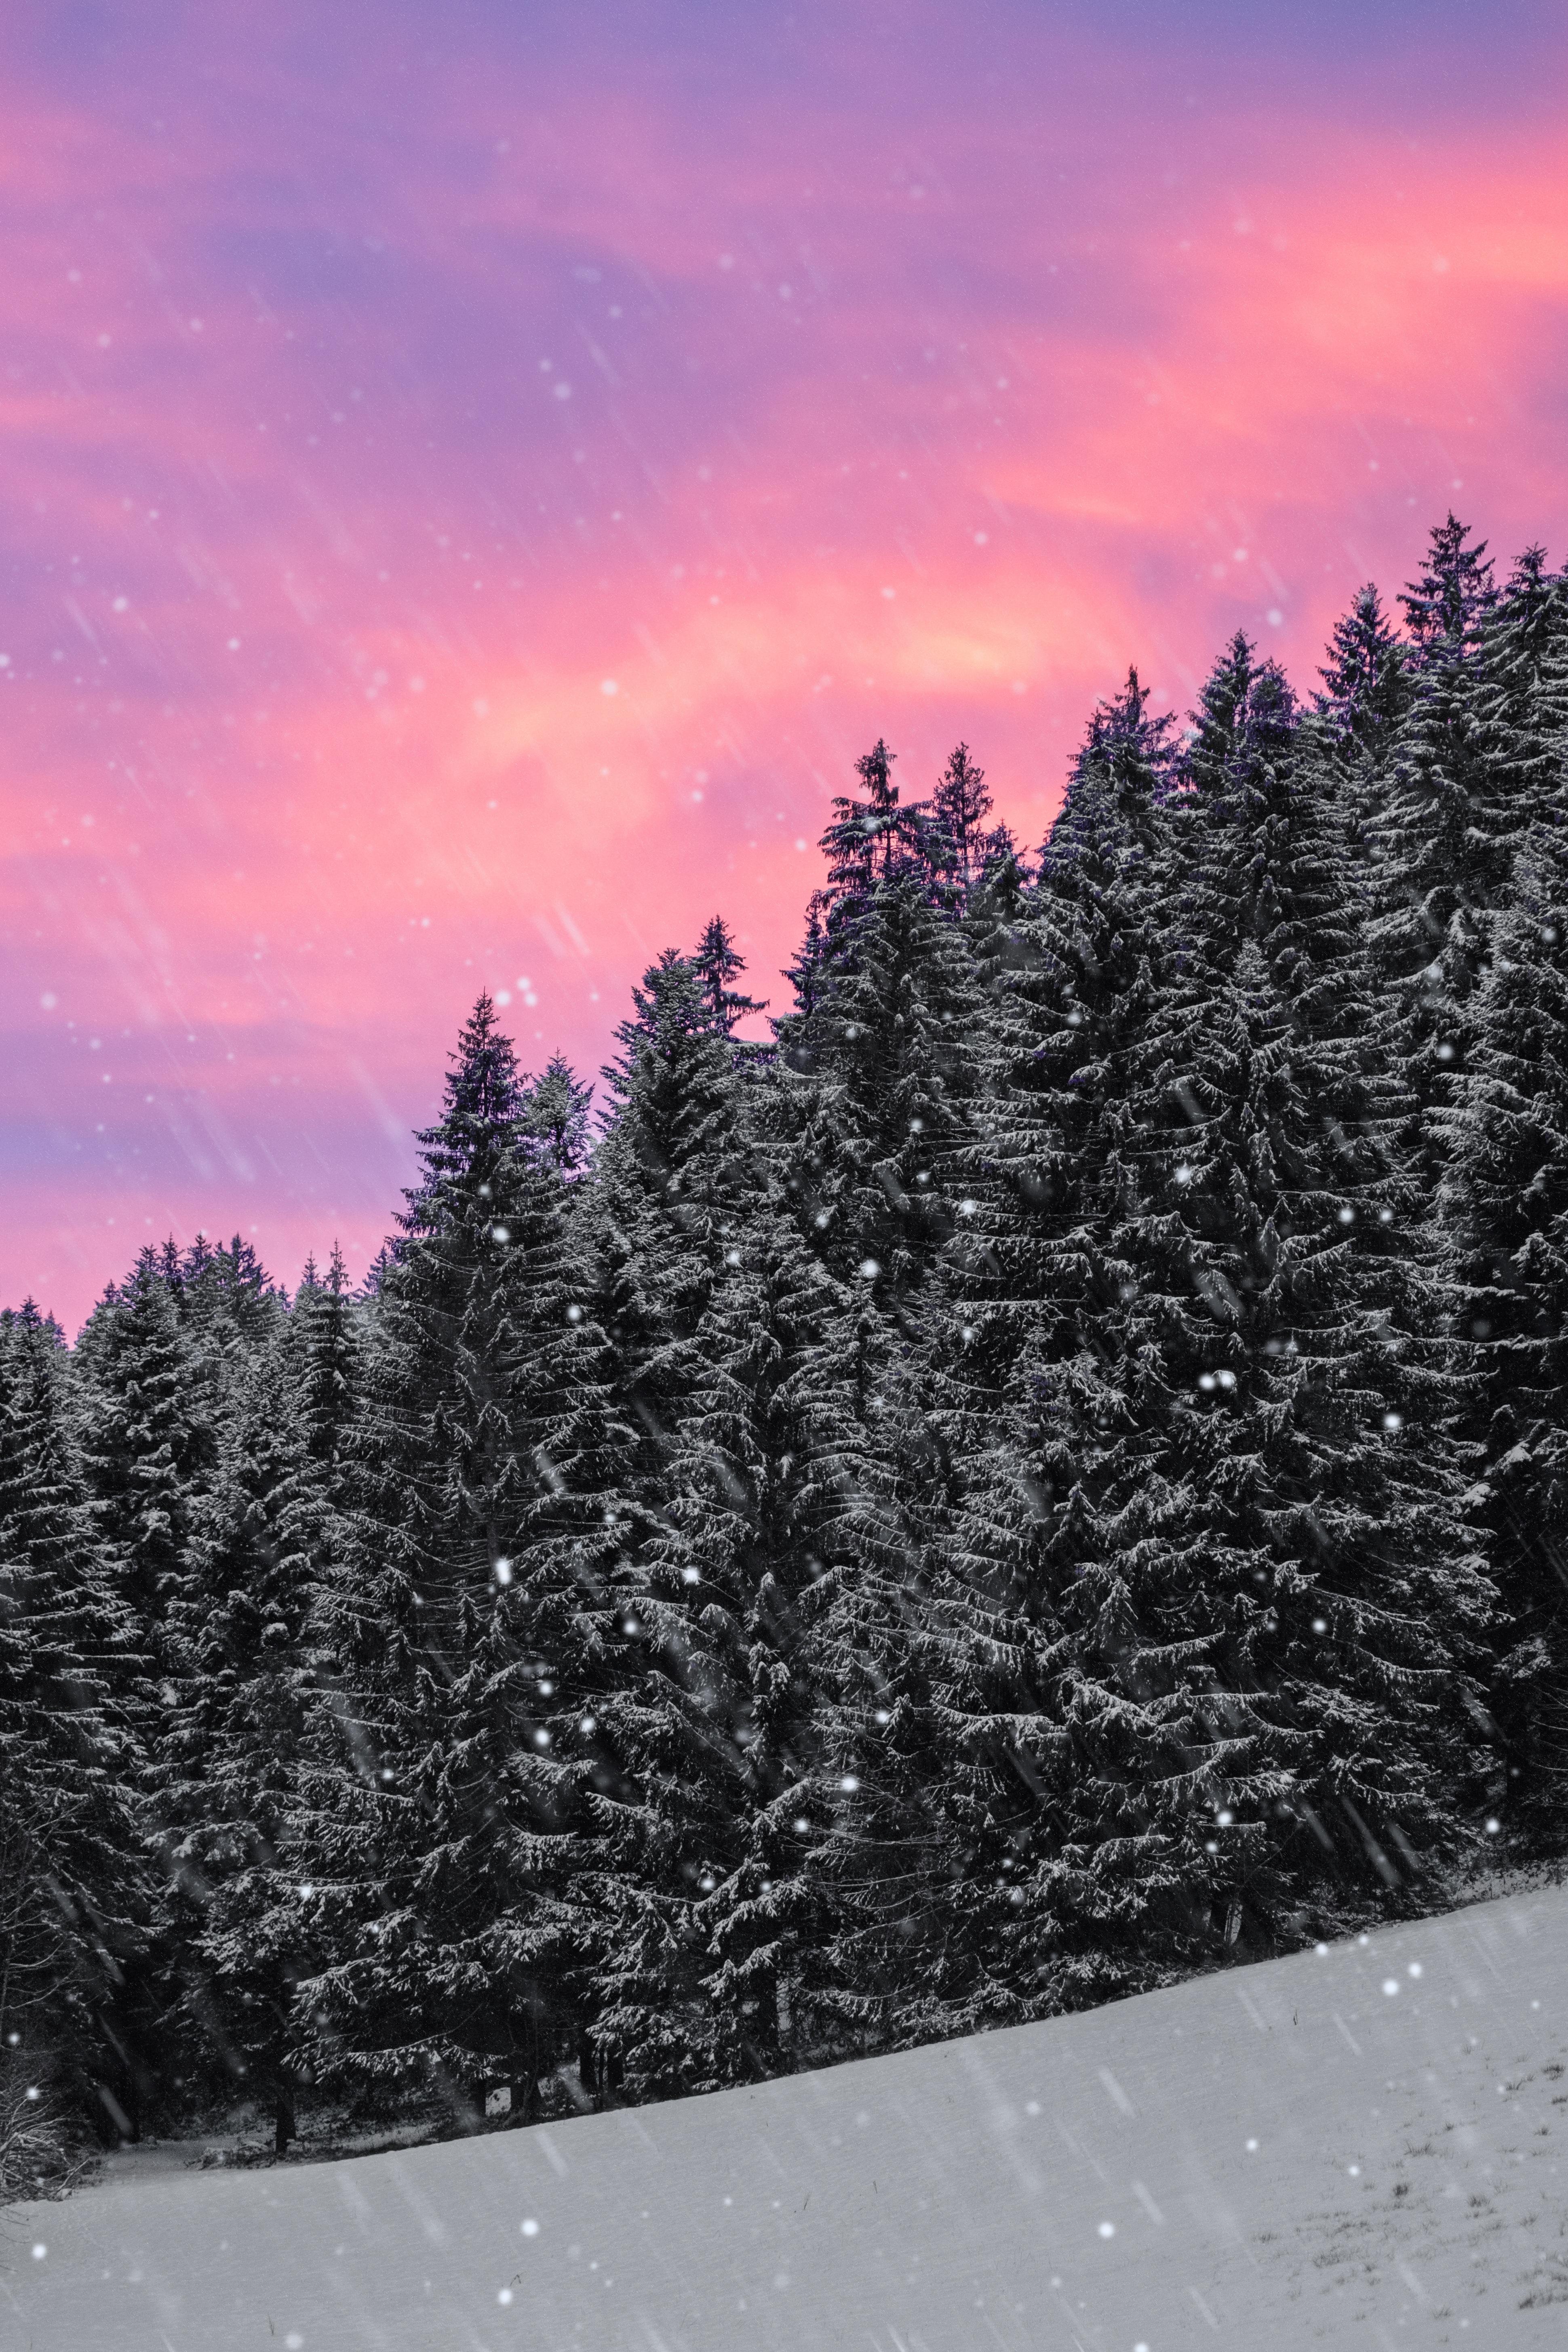 Download wallpaper 3880x5820 spruce, snow, snowfall, sky